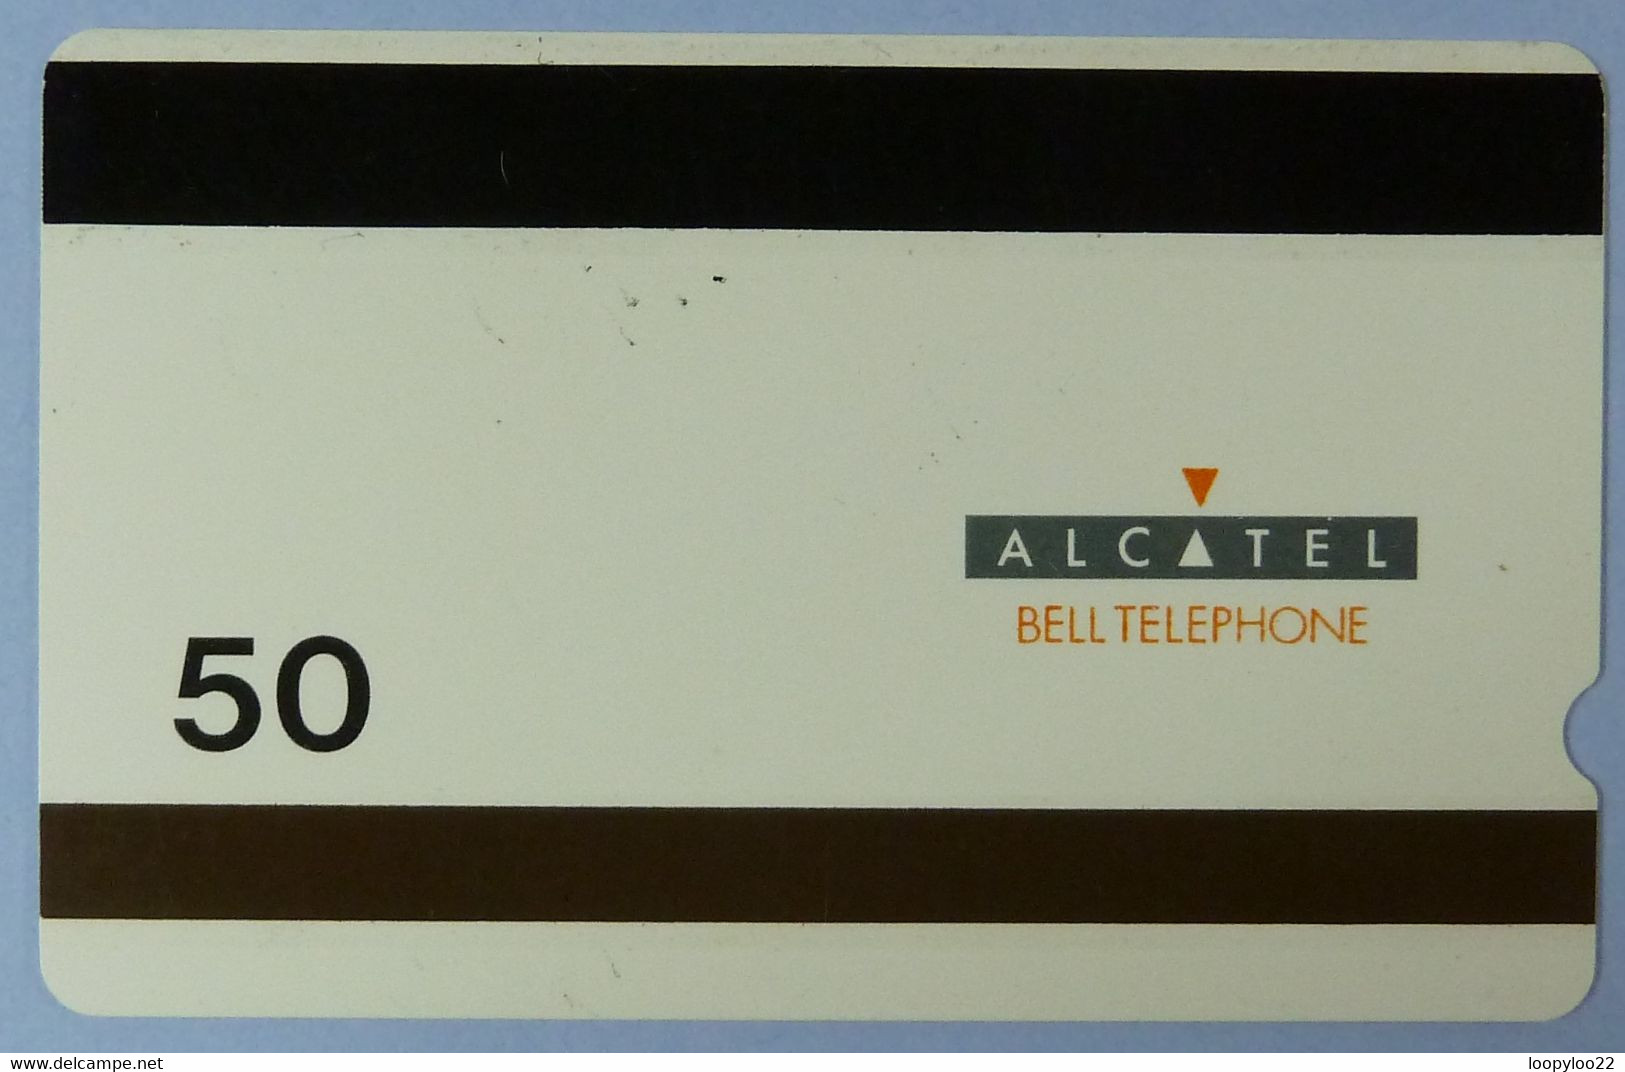 BELGIUM / POLAND- Alcatel - Credifaxphone (Man) - Magnetic - Field Trial / Test - 50 - Bell Telephone - Used - Servizi E Test